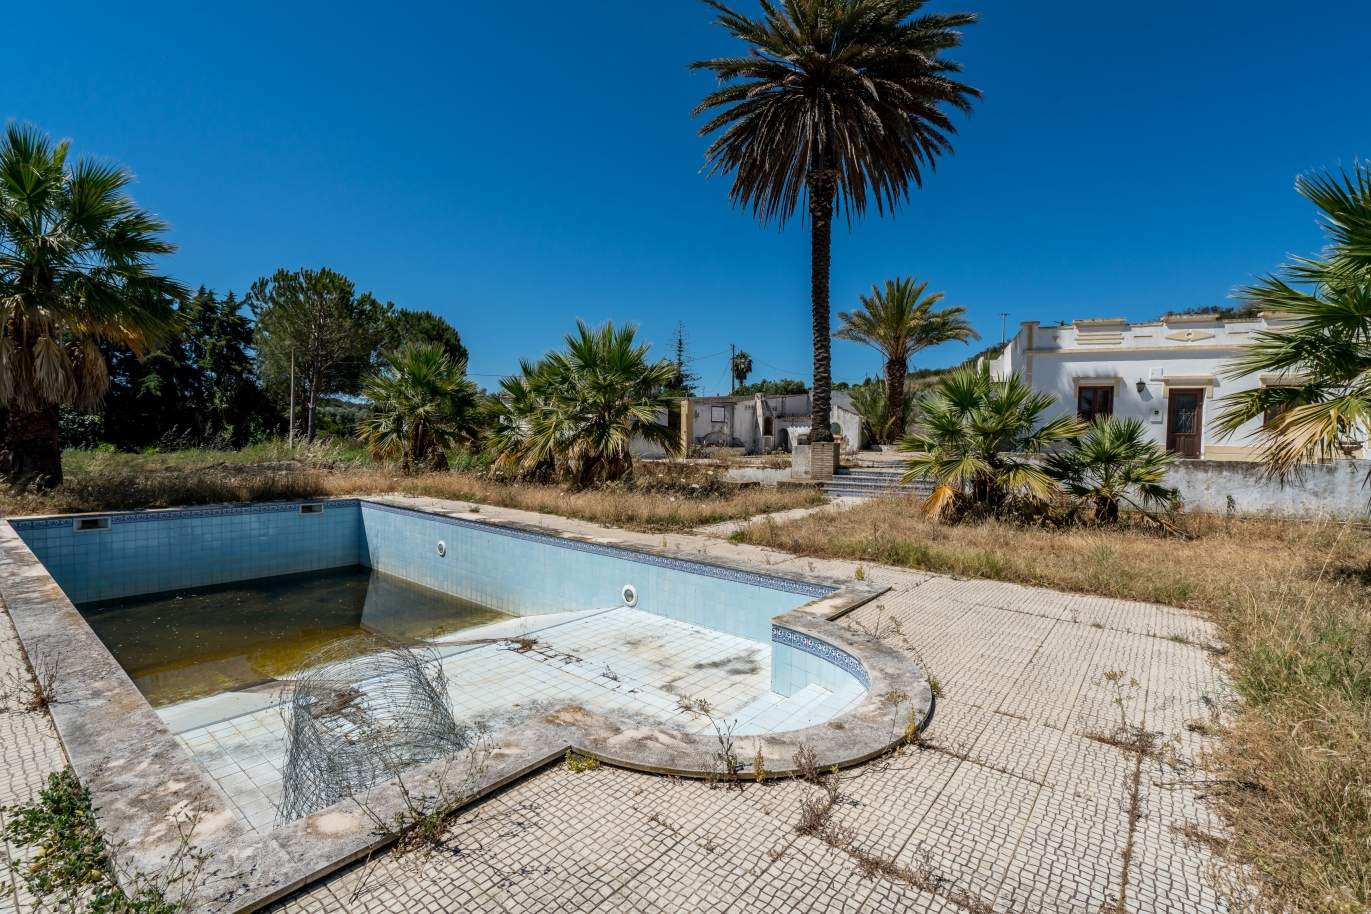 Immobilienverkauf in Alcantarilha, Silves, Algarve, Portugal_105716